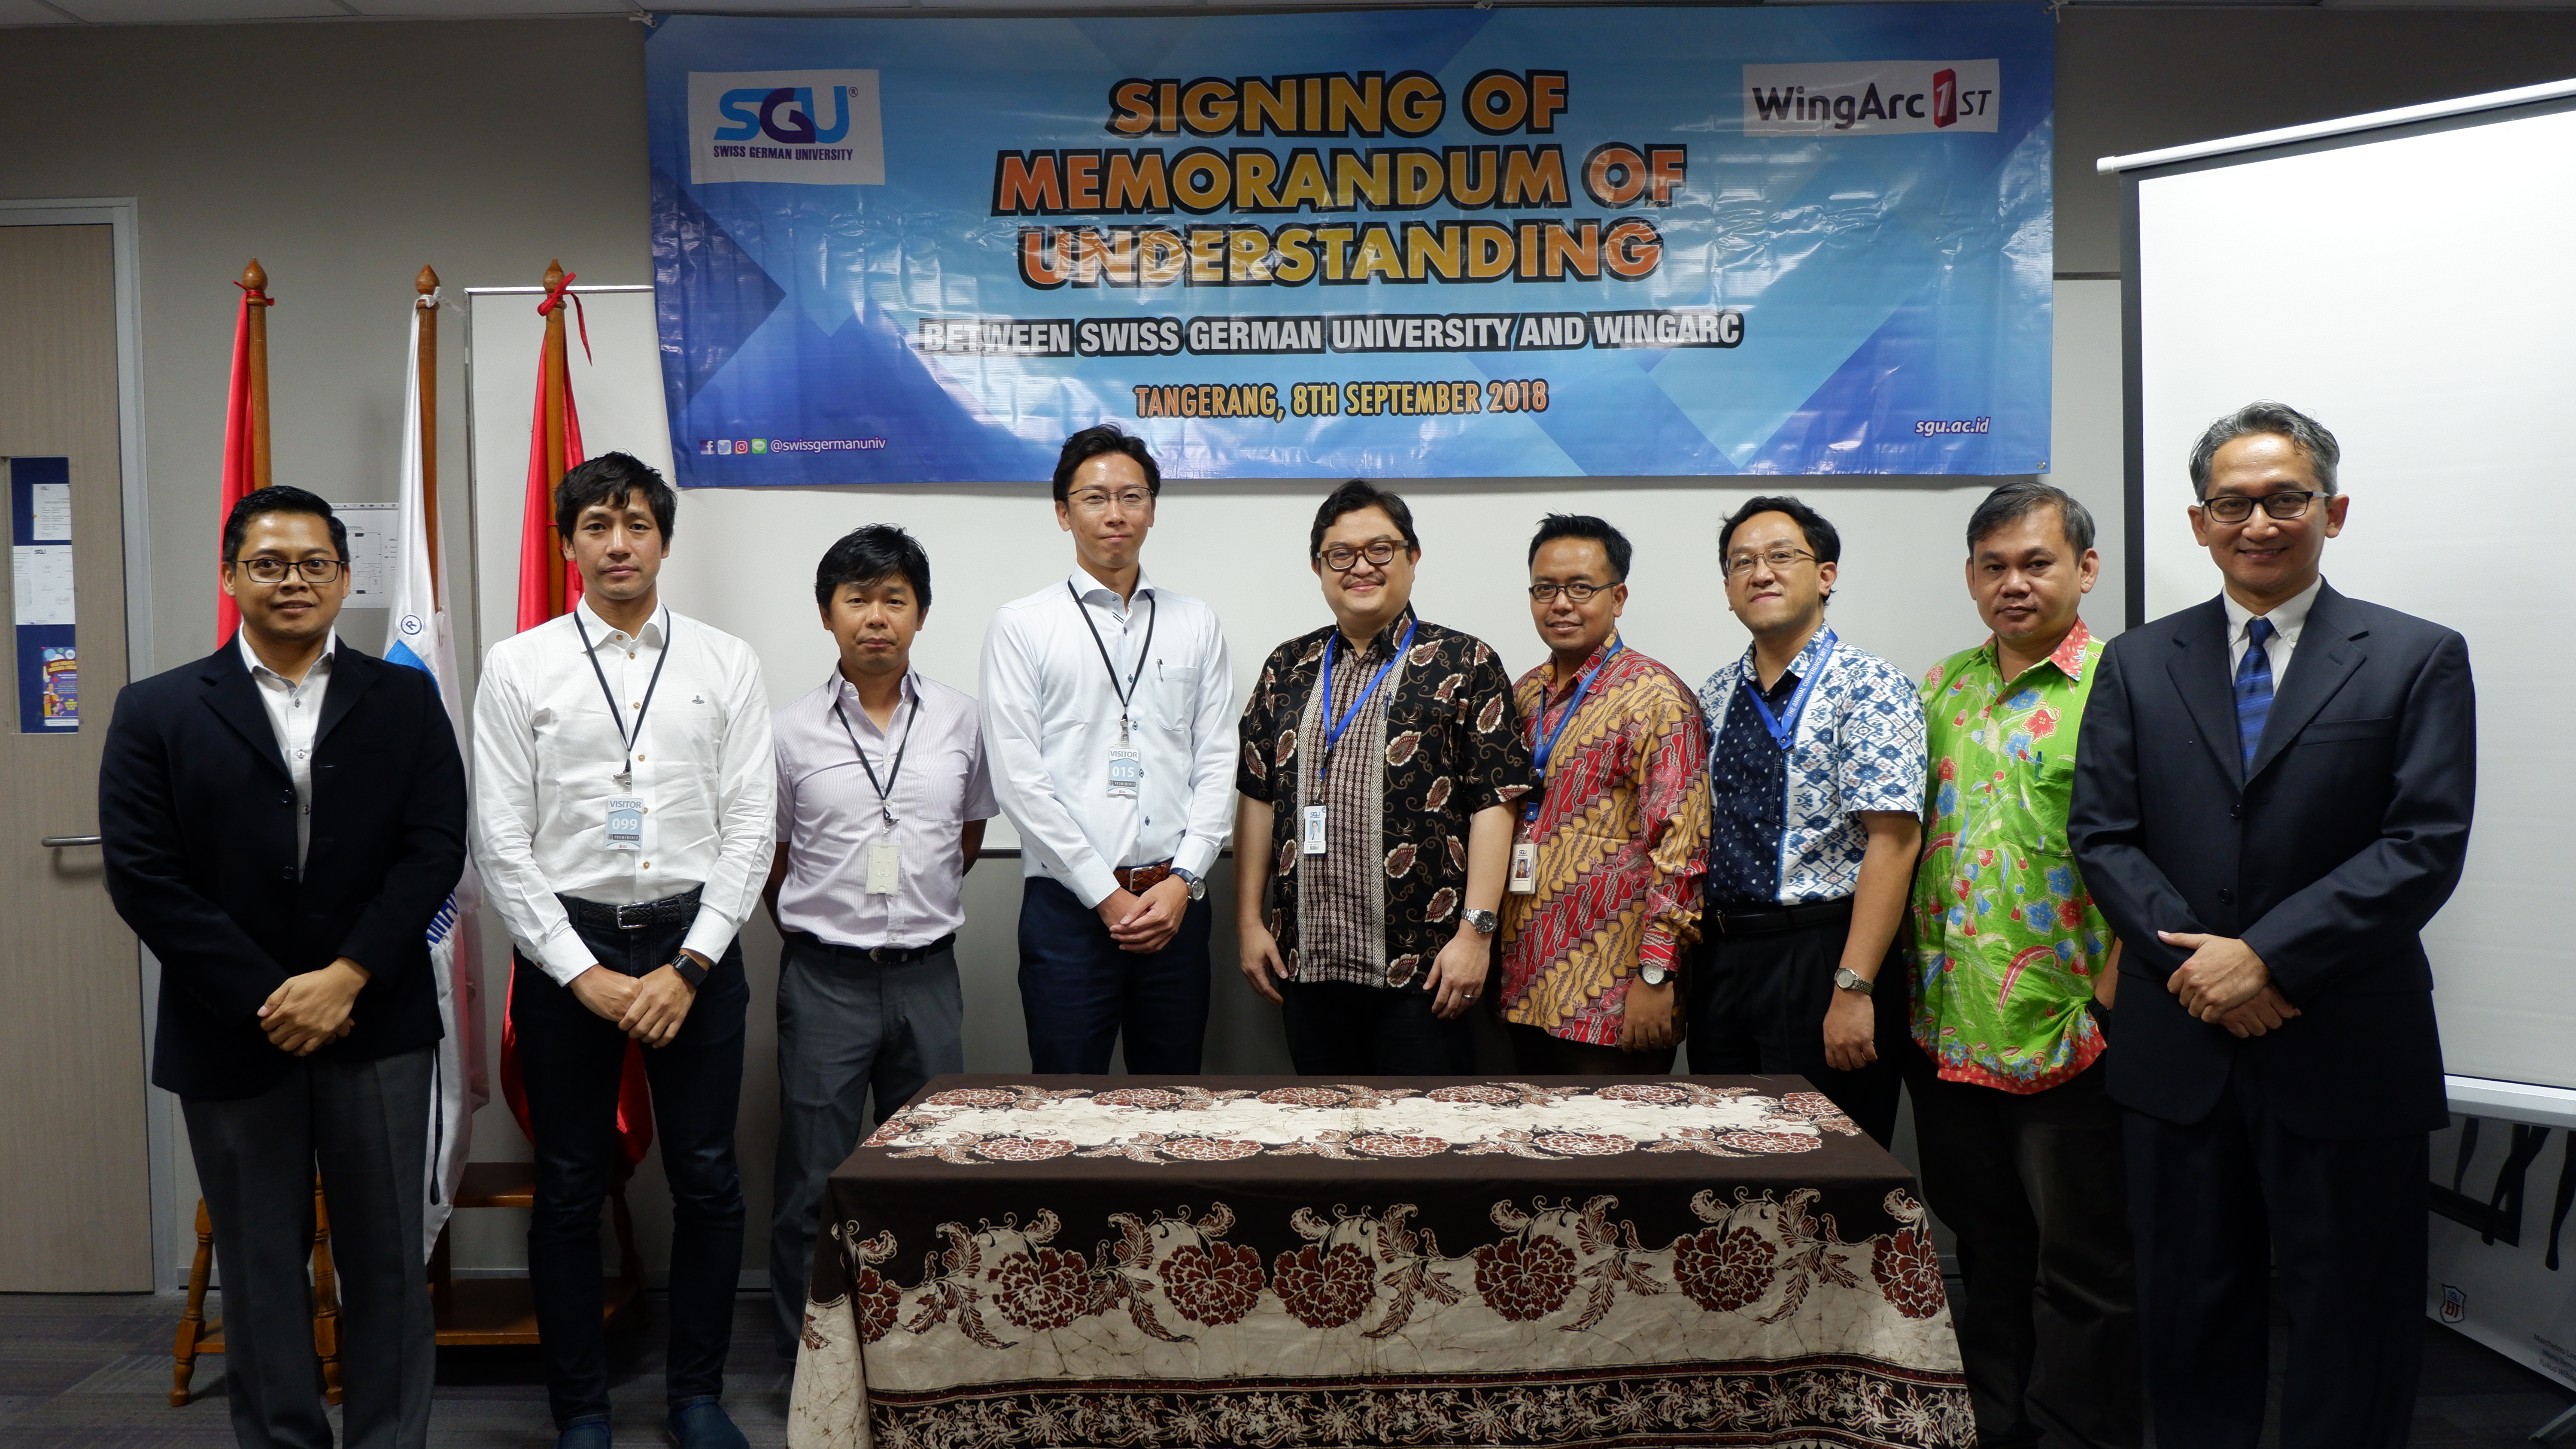 SGU signed a Memorandum of Understanding with Wingarc Singapore